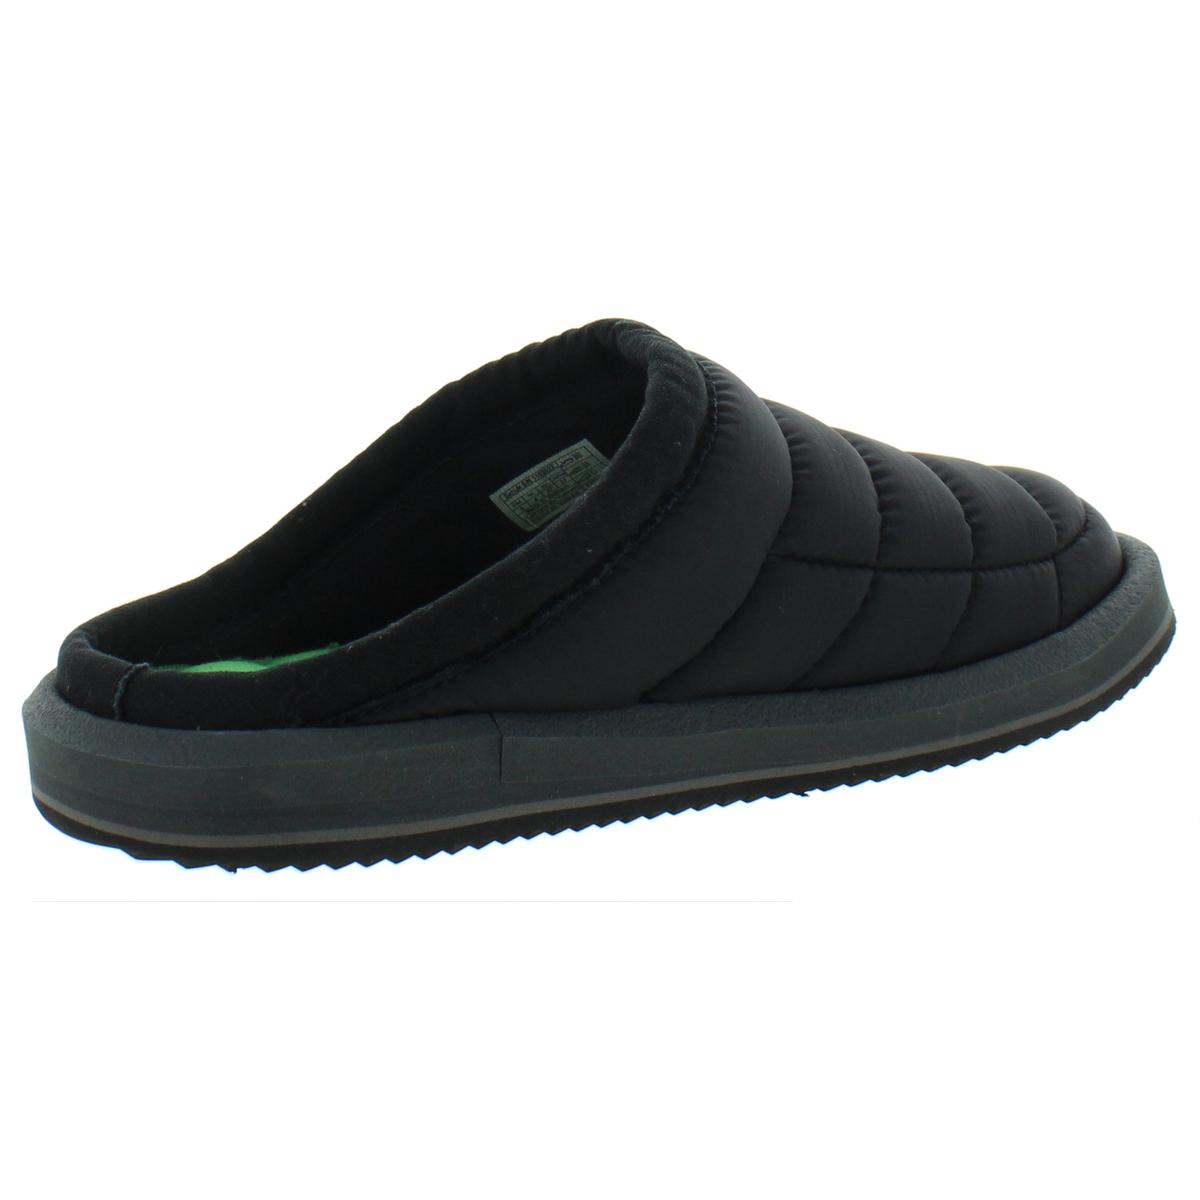 Sanuk Womens Puff N Chill Black Mule Slippers Shoes 8 Medium (B,M) BHFO ...